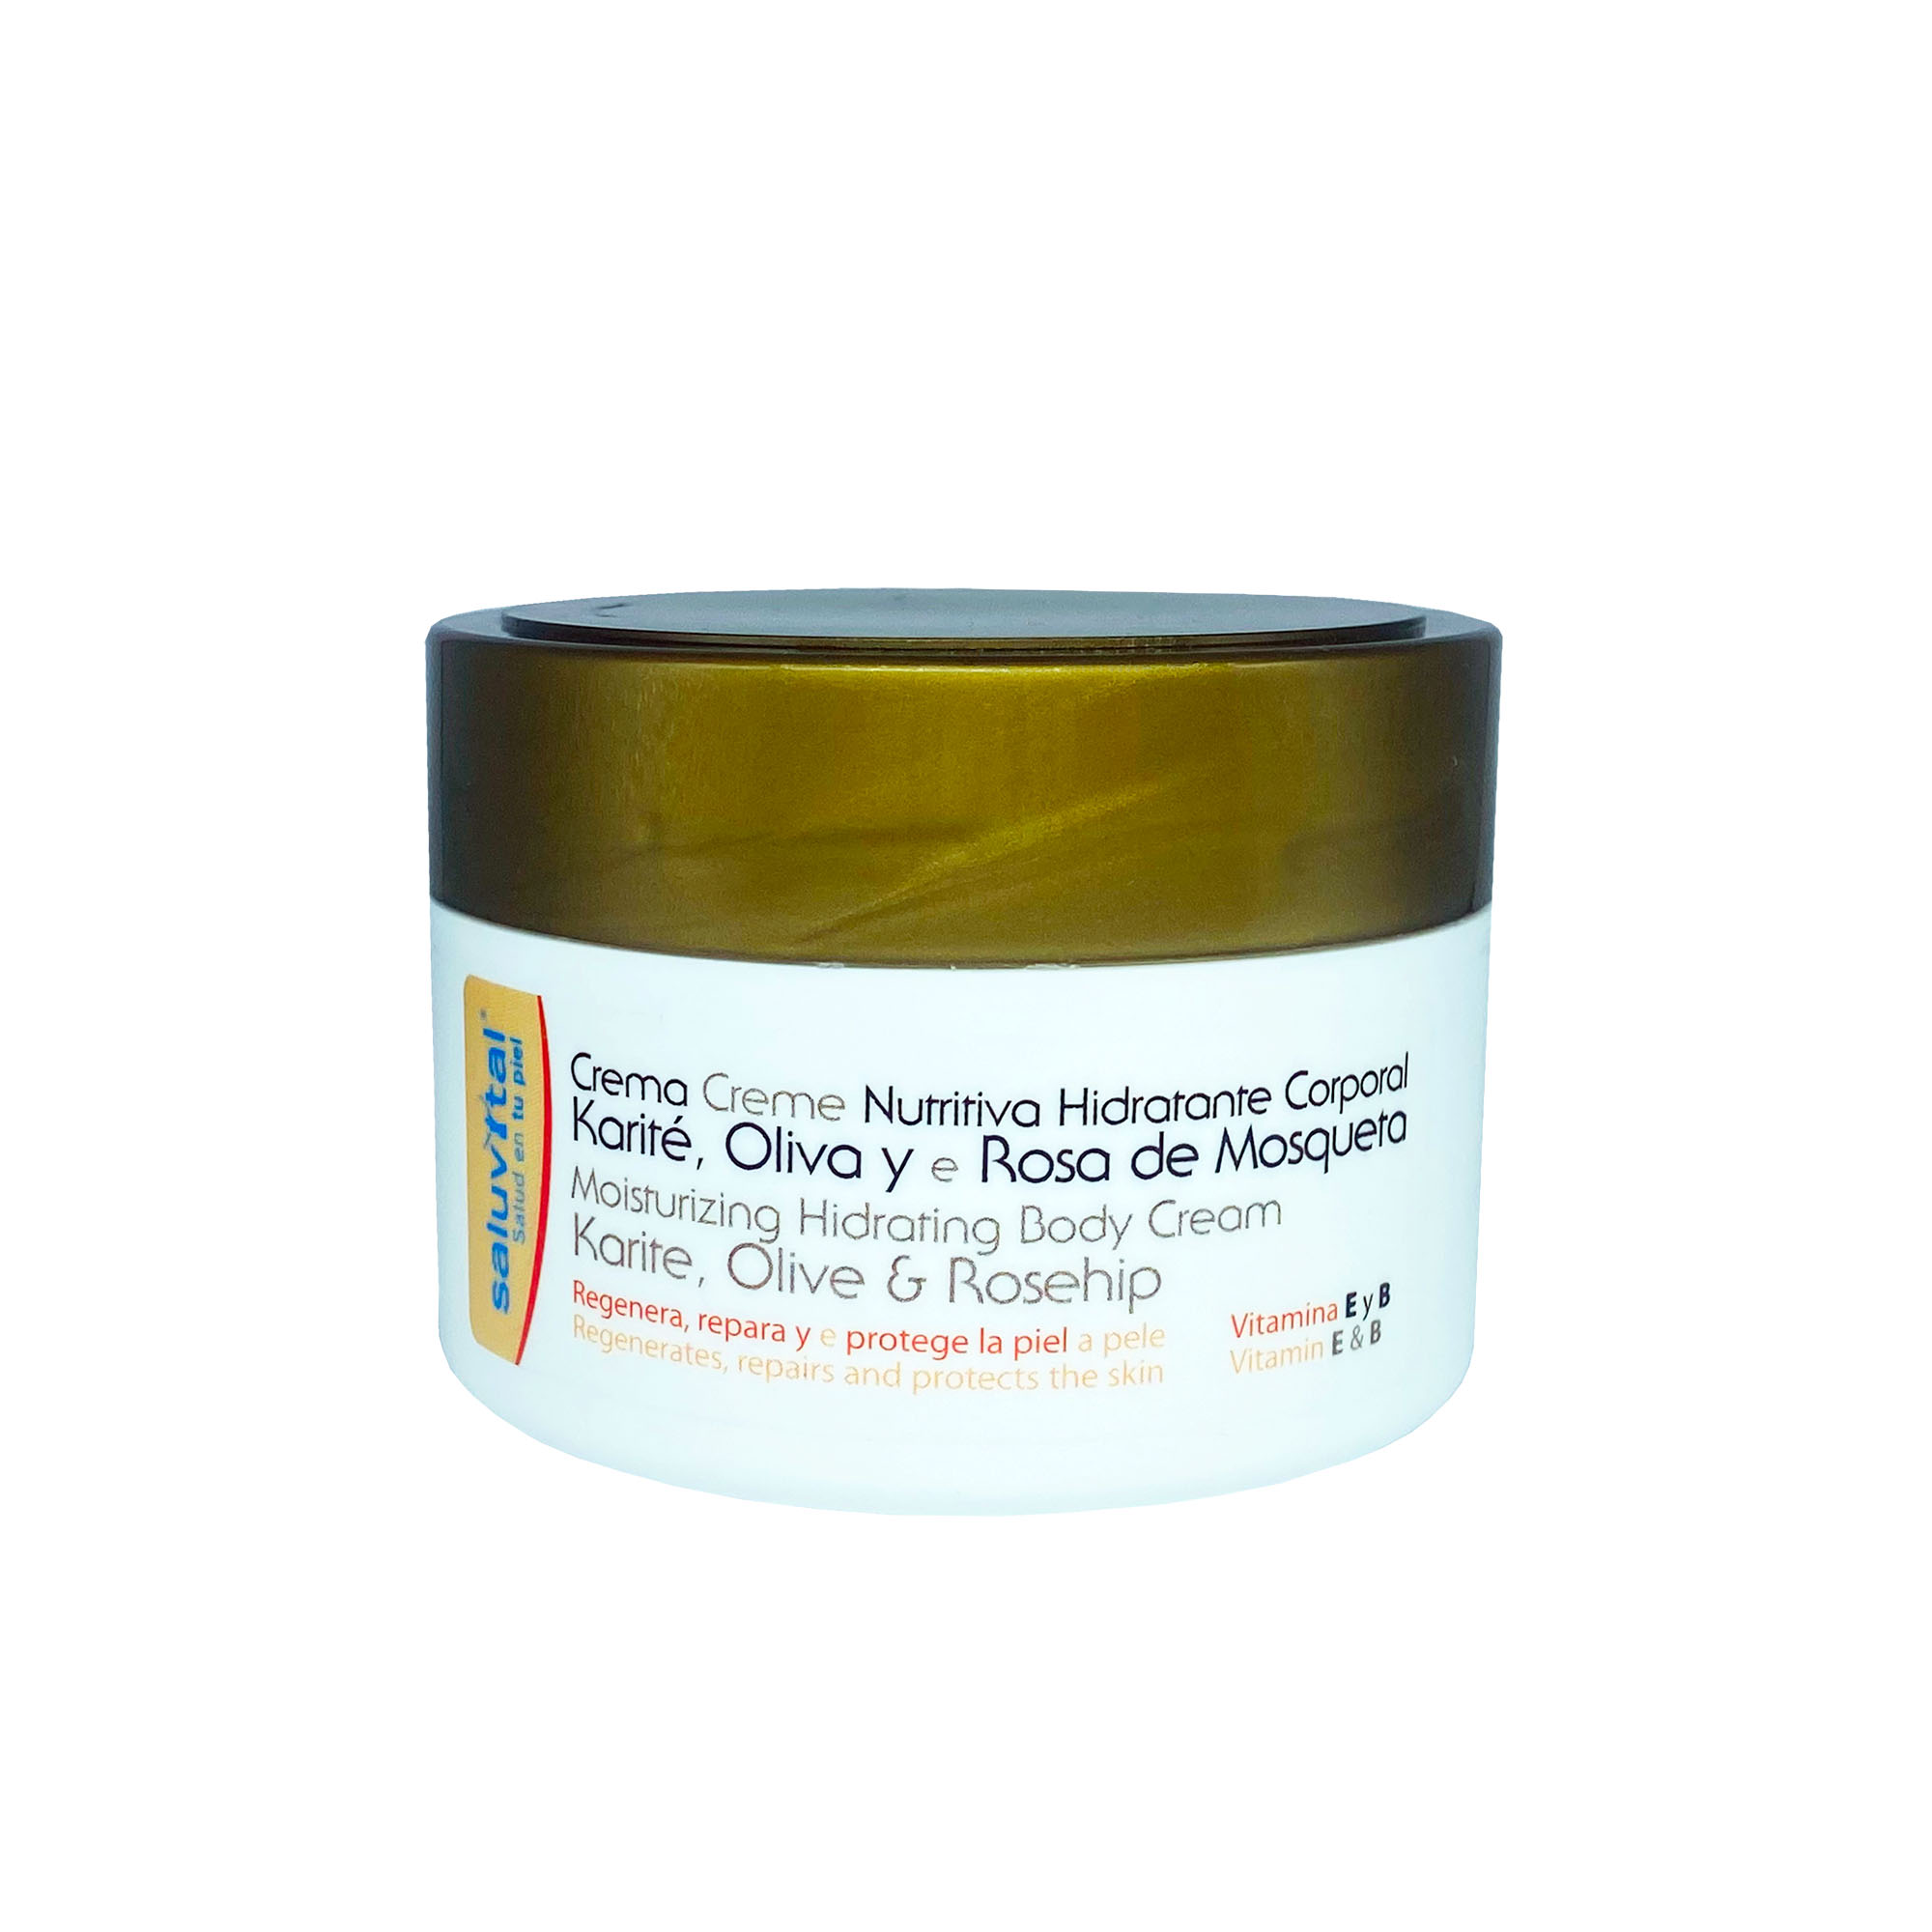 Moisturizing Hidrating Body Cream Karite, Olive & Rosehip – 200 ml.